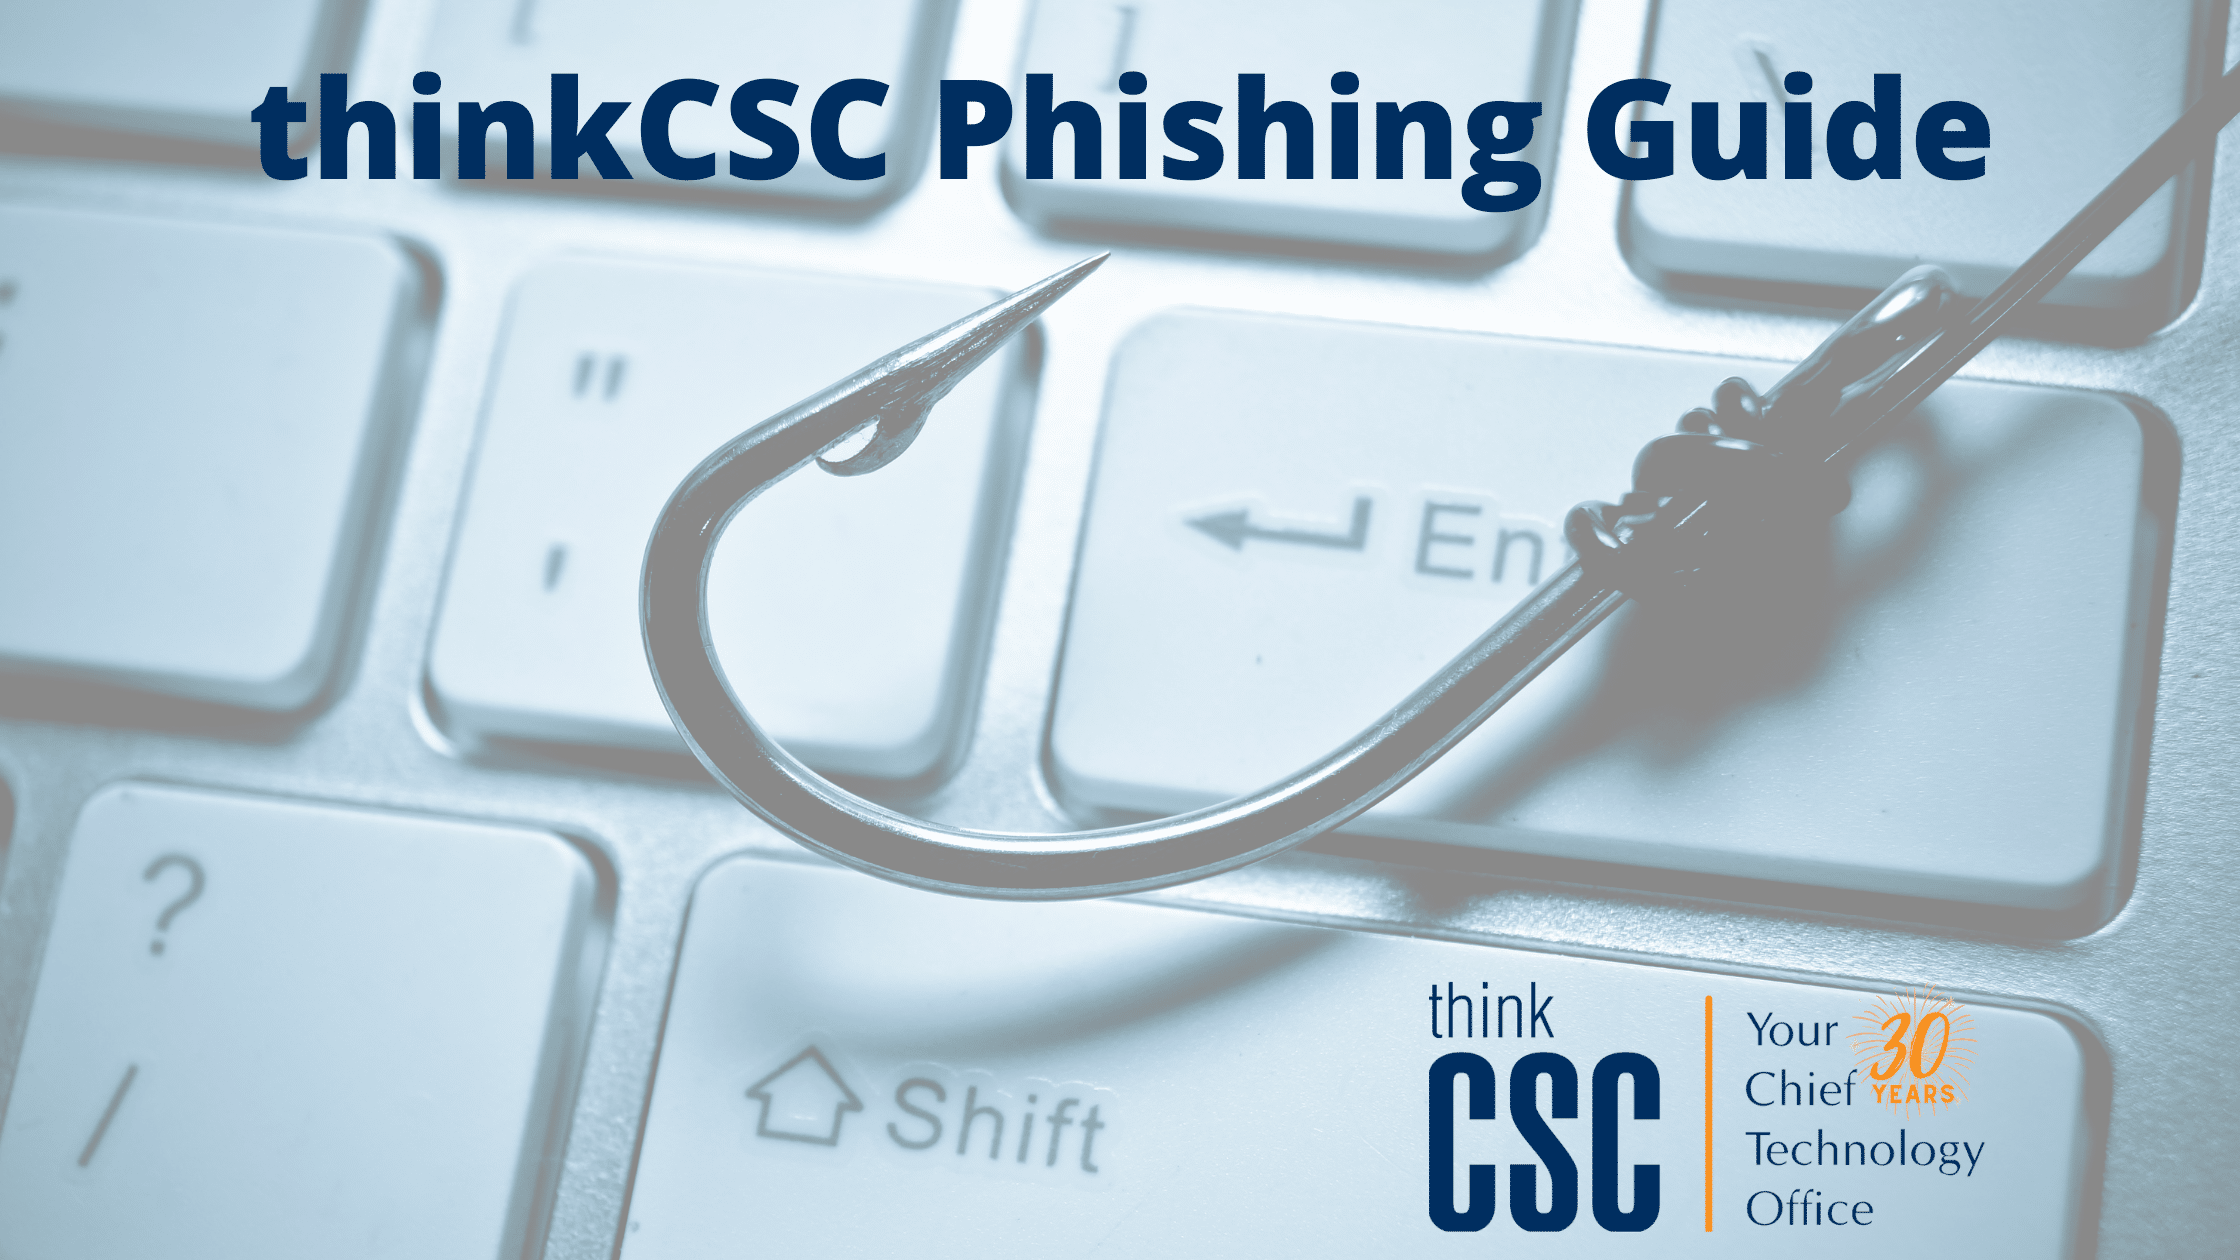 thinkCSC Phishing Guide: Don’t Take the Bait